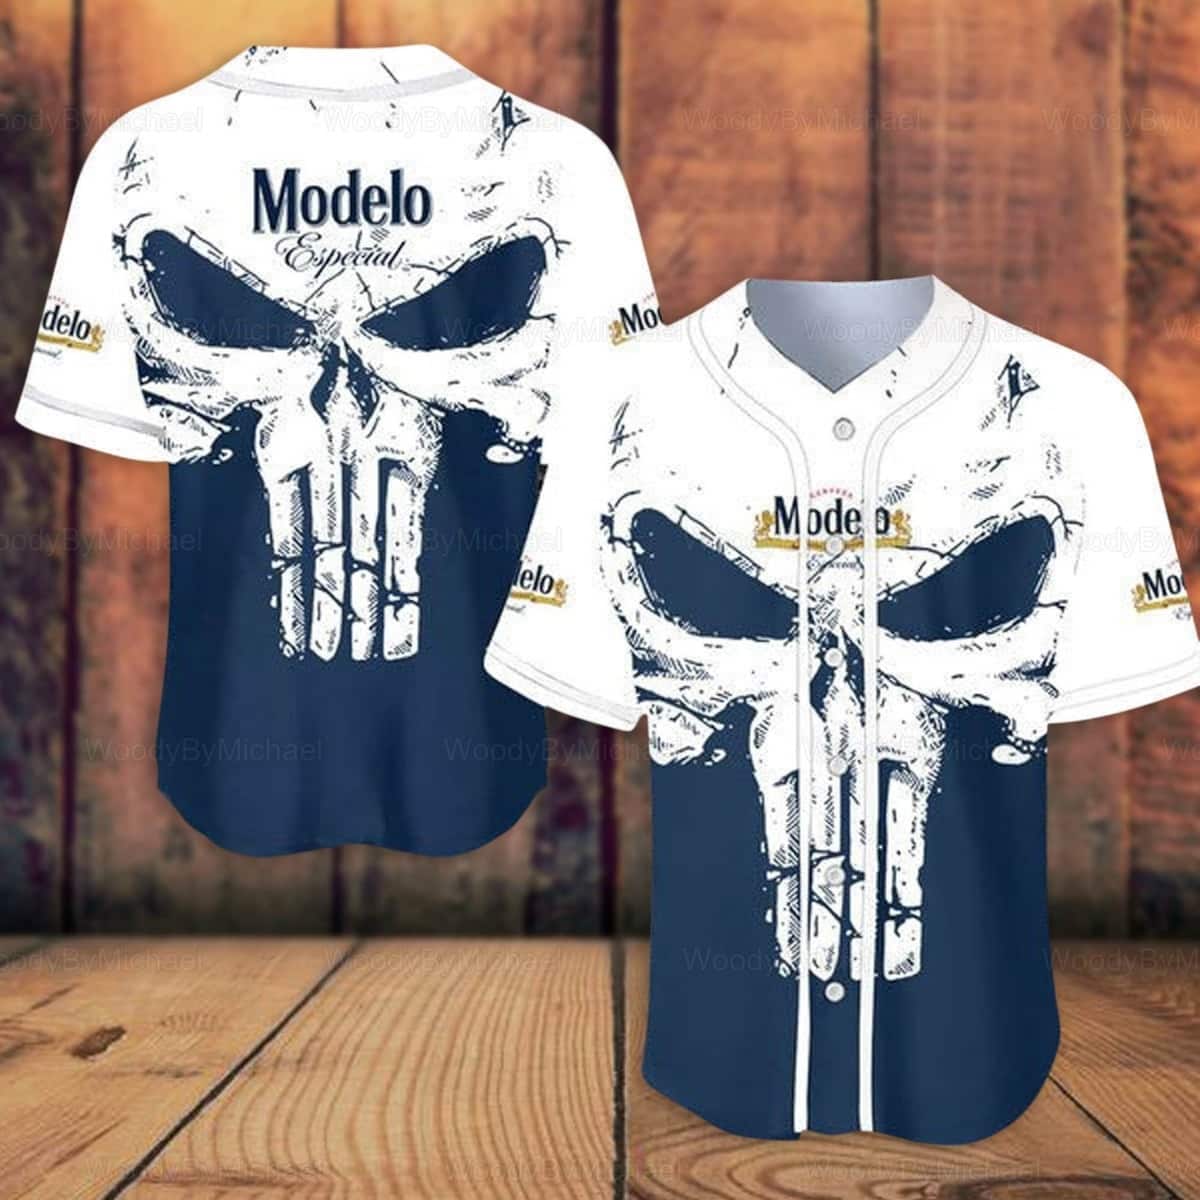 White Skull With Especial Modelo Baseball Jersey Gift For Beer Lovers